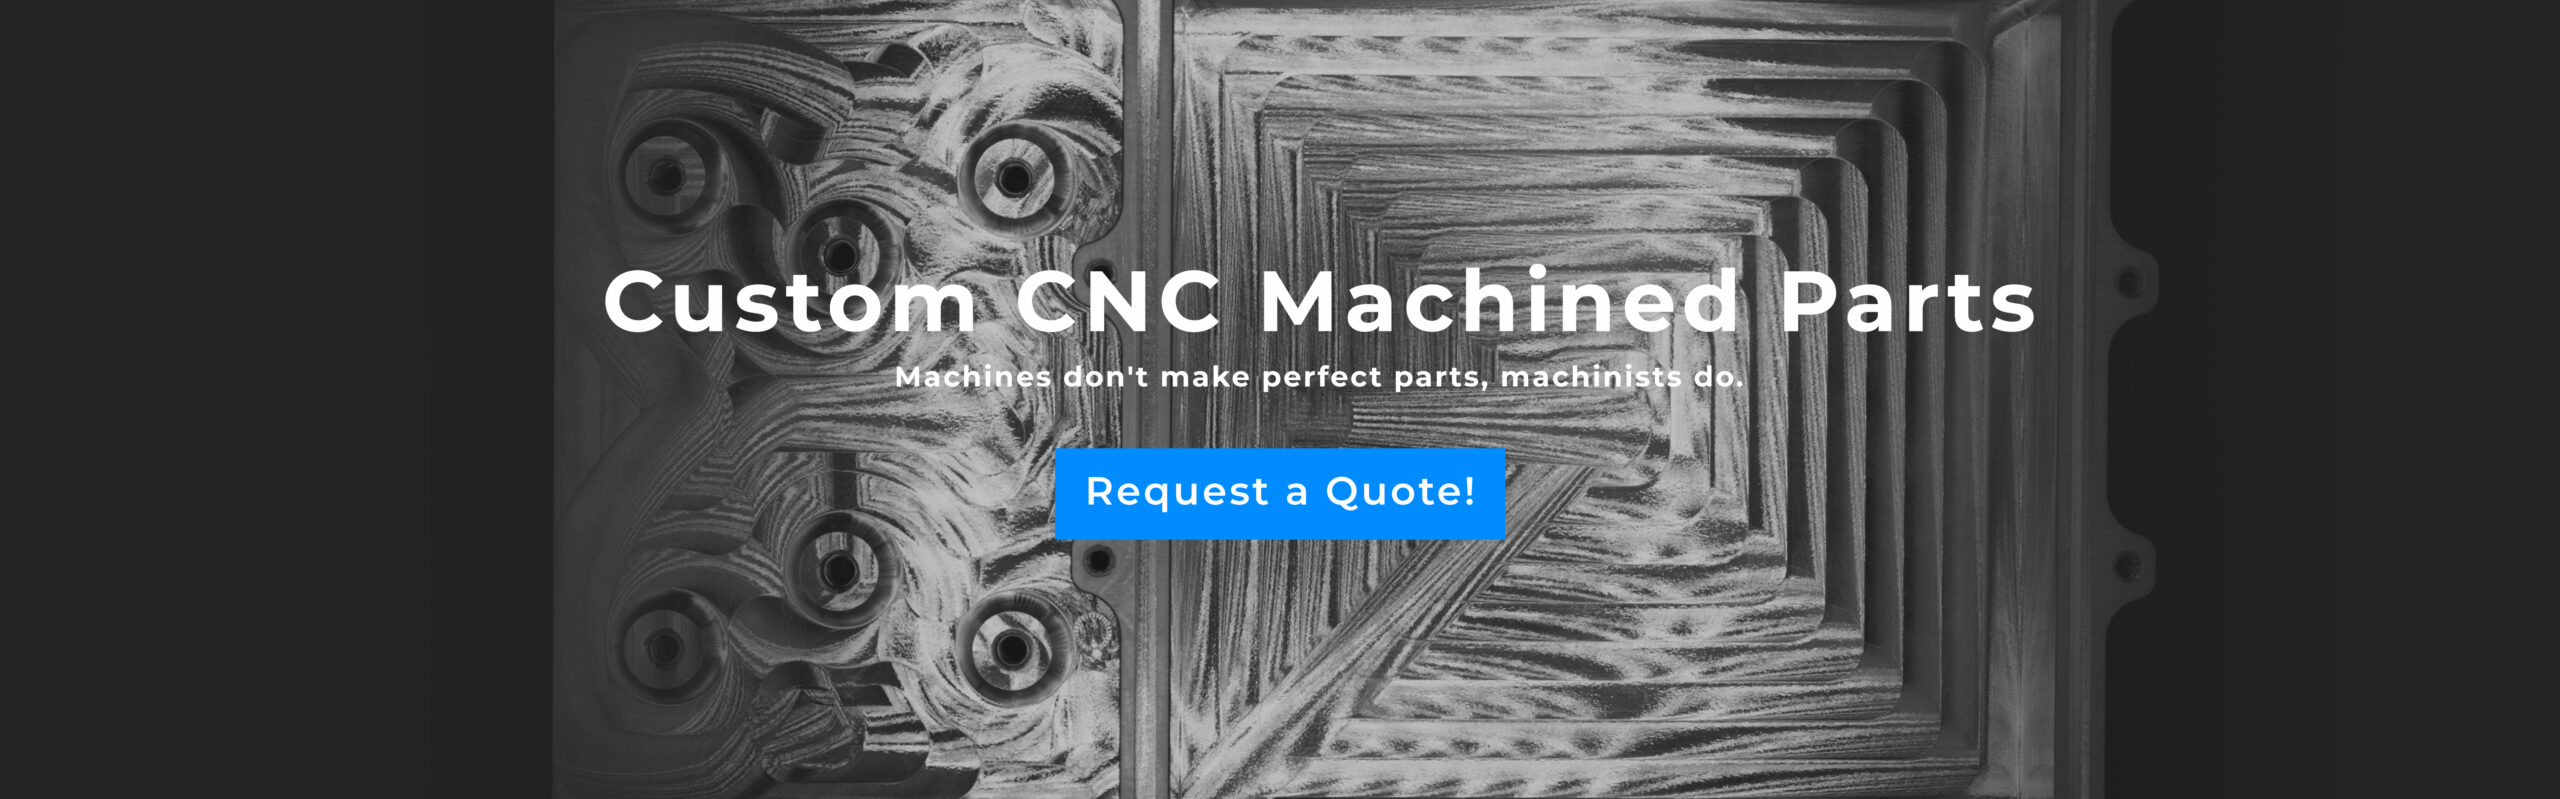 Custom CNC Machined Parts